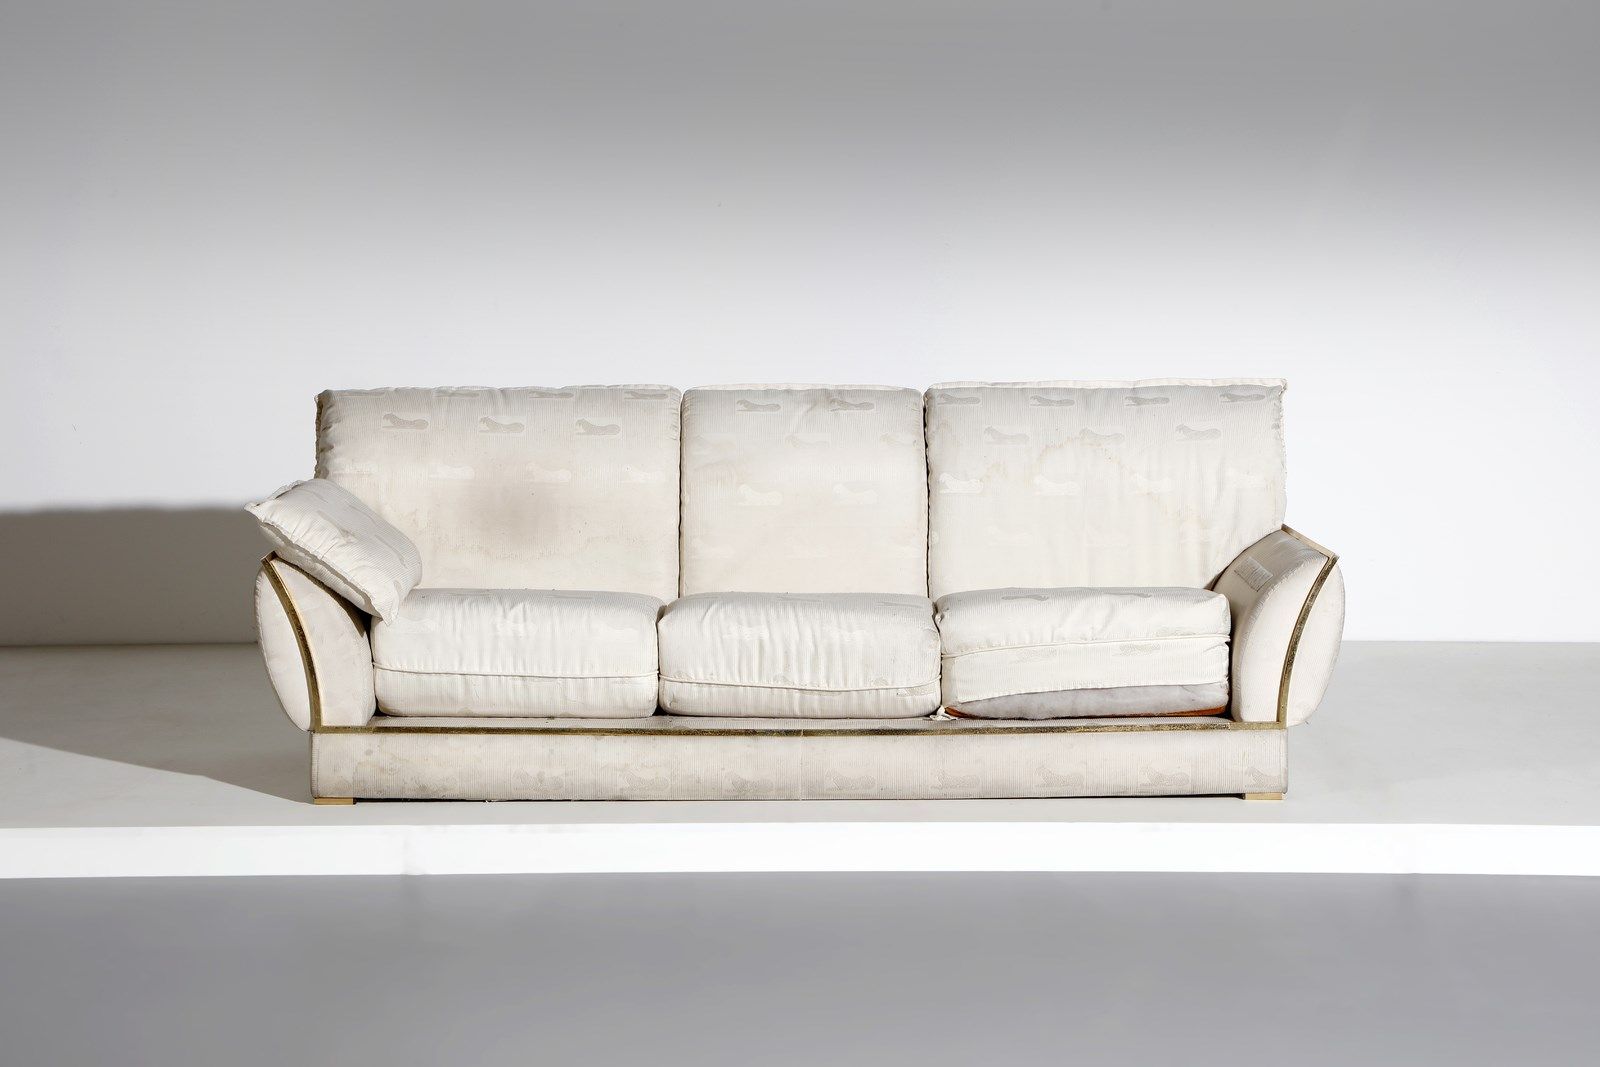 SMANIA ALBERTO ALBERTO 沙发。木头和软垫织物。Cm 237.00 x 87.00 x 90.00. 1970年代。